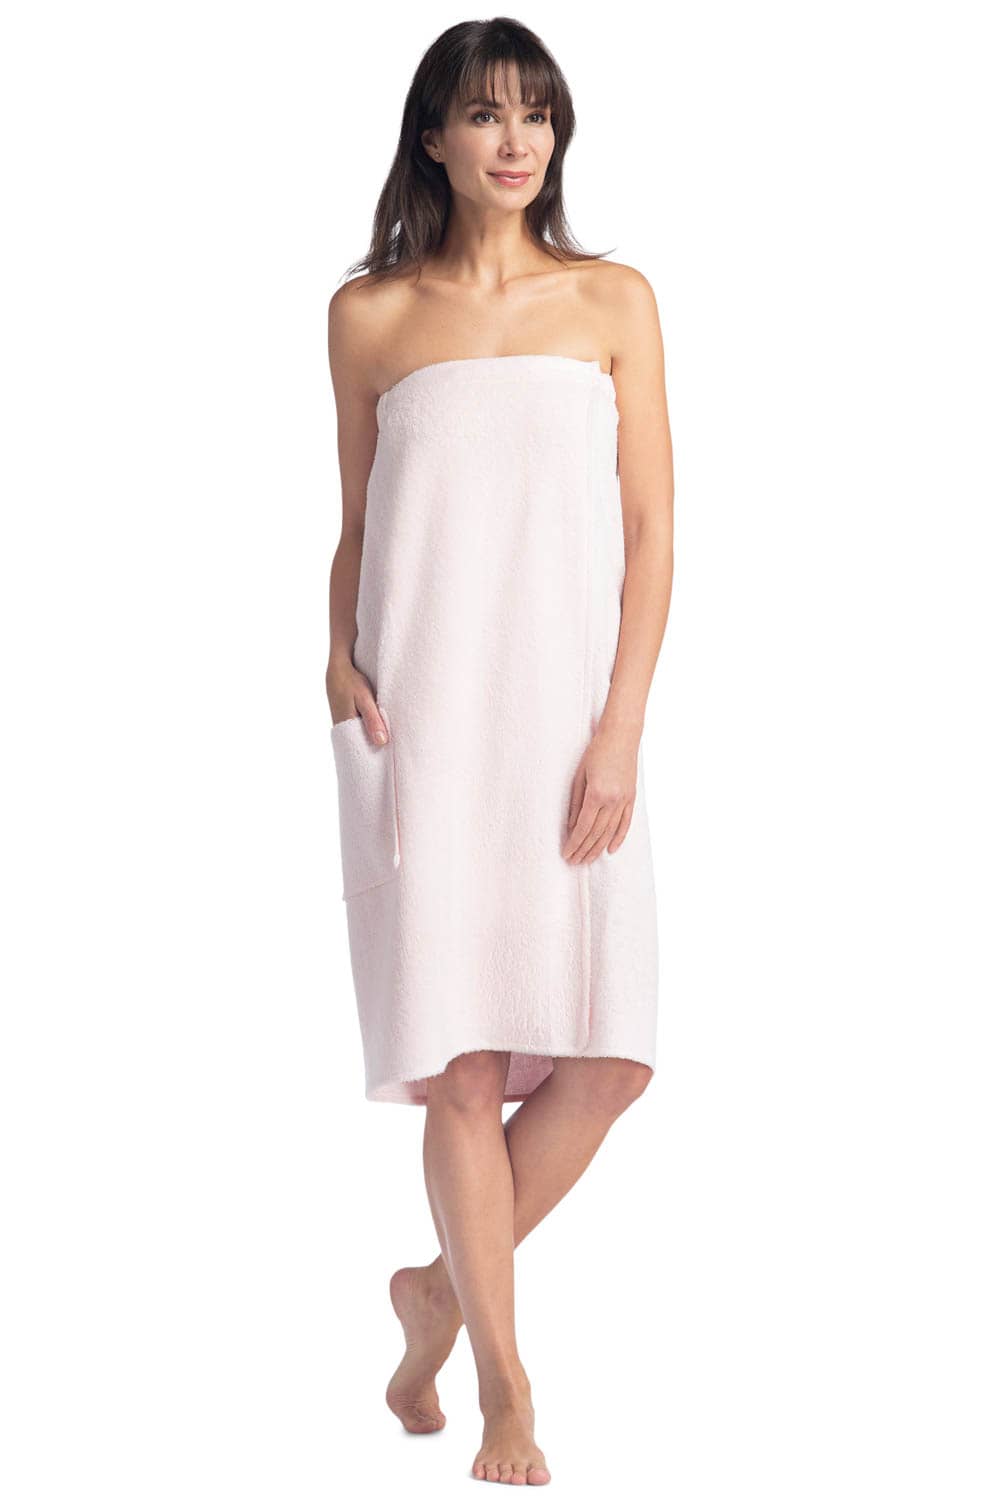 Towel wrap for women, Sauna towels Plus size spa wrap, Bath wrap